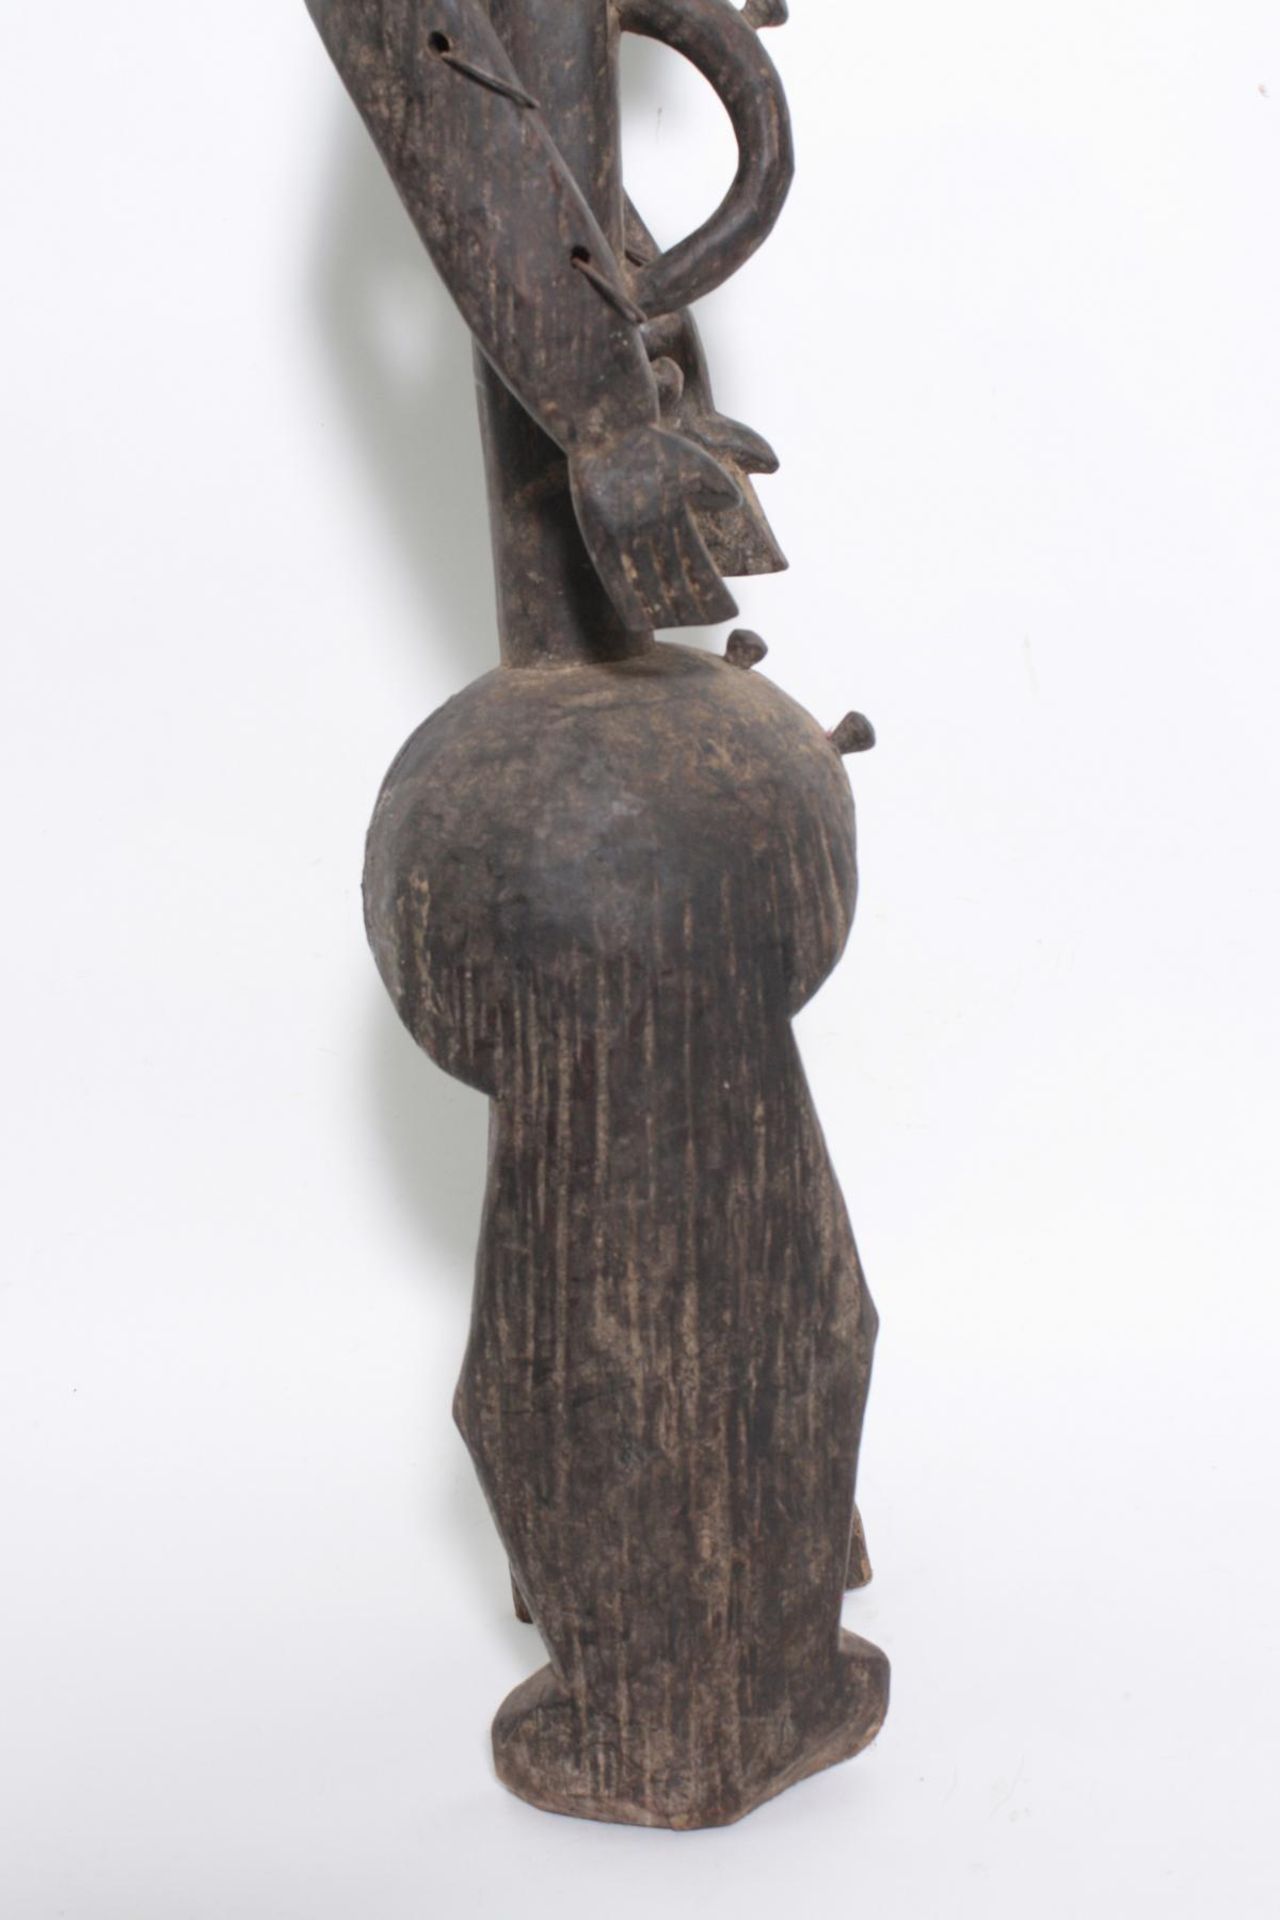 Ritualfigur der Mumuye, "Iagalagana", Nigeria. 1. Hälfte 20. Jh. - Bild 6 aus 15